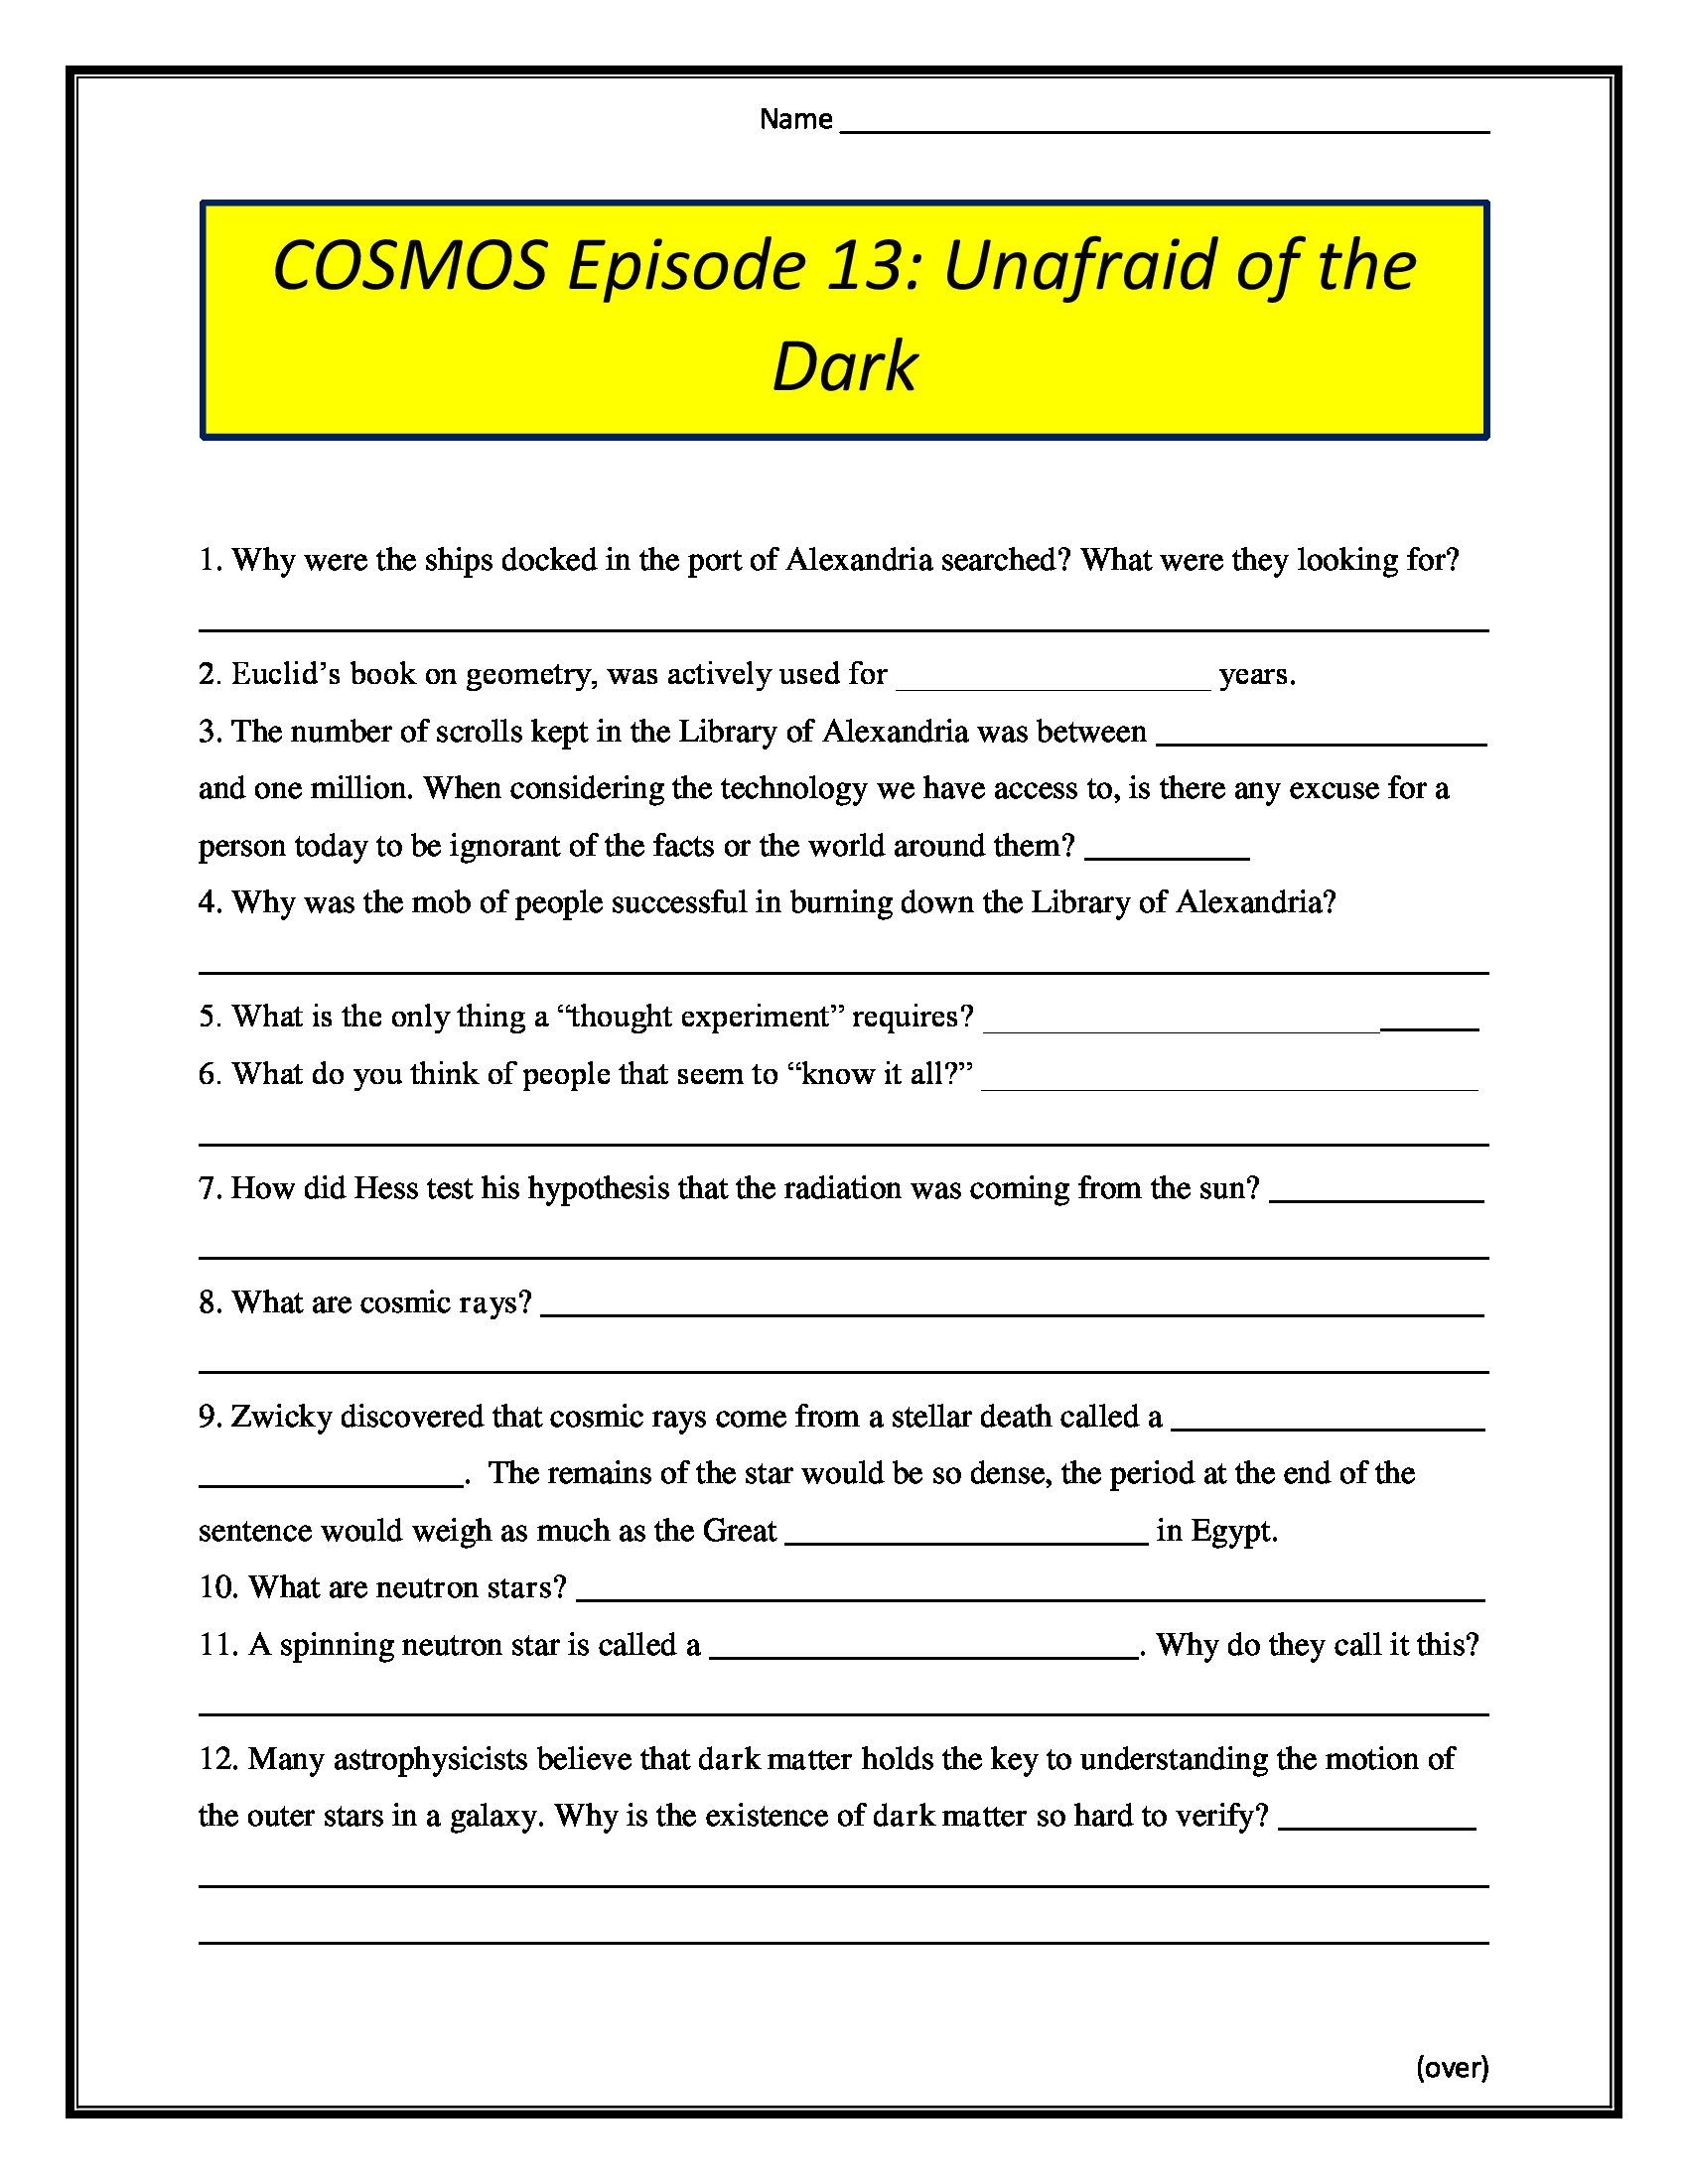 Cosmos Episode 13 Unafraid Of The Dark Worksheet 2014 With Regard To Cosmos Episode 1 Worksheet Answer Key